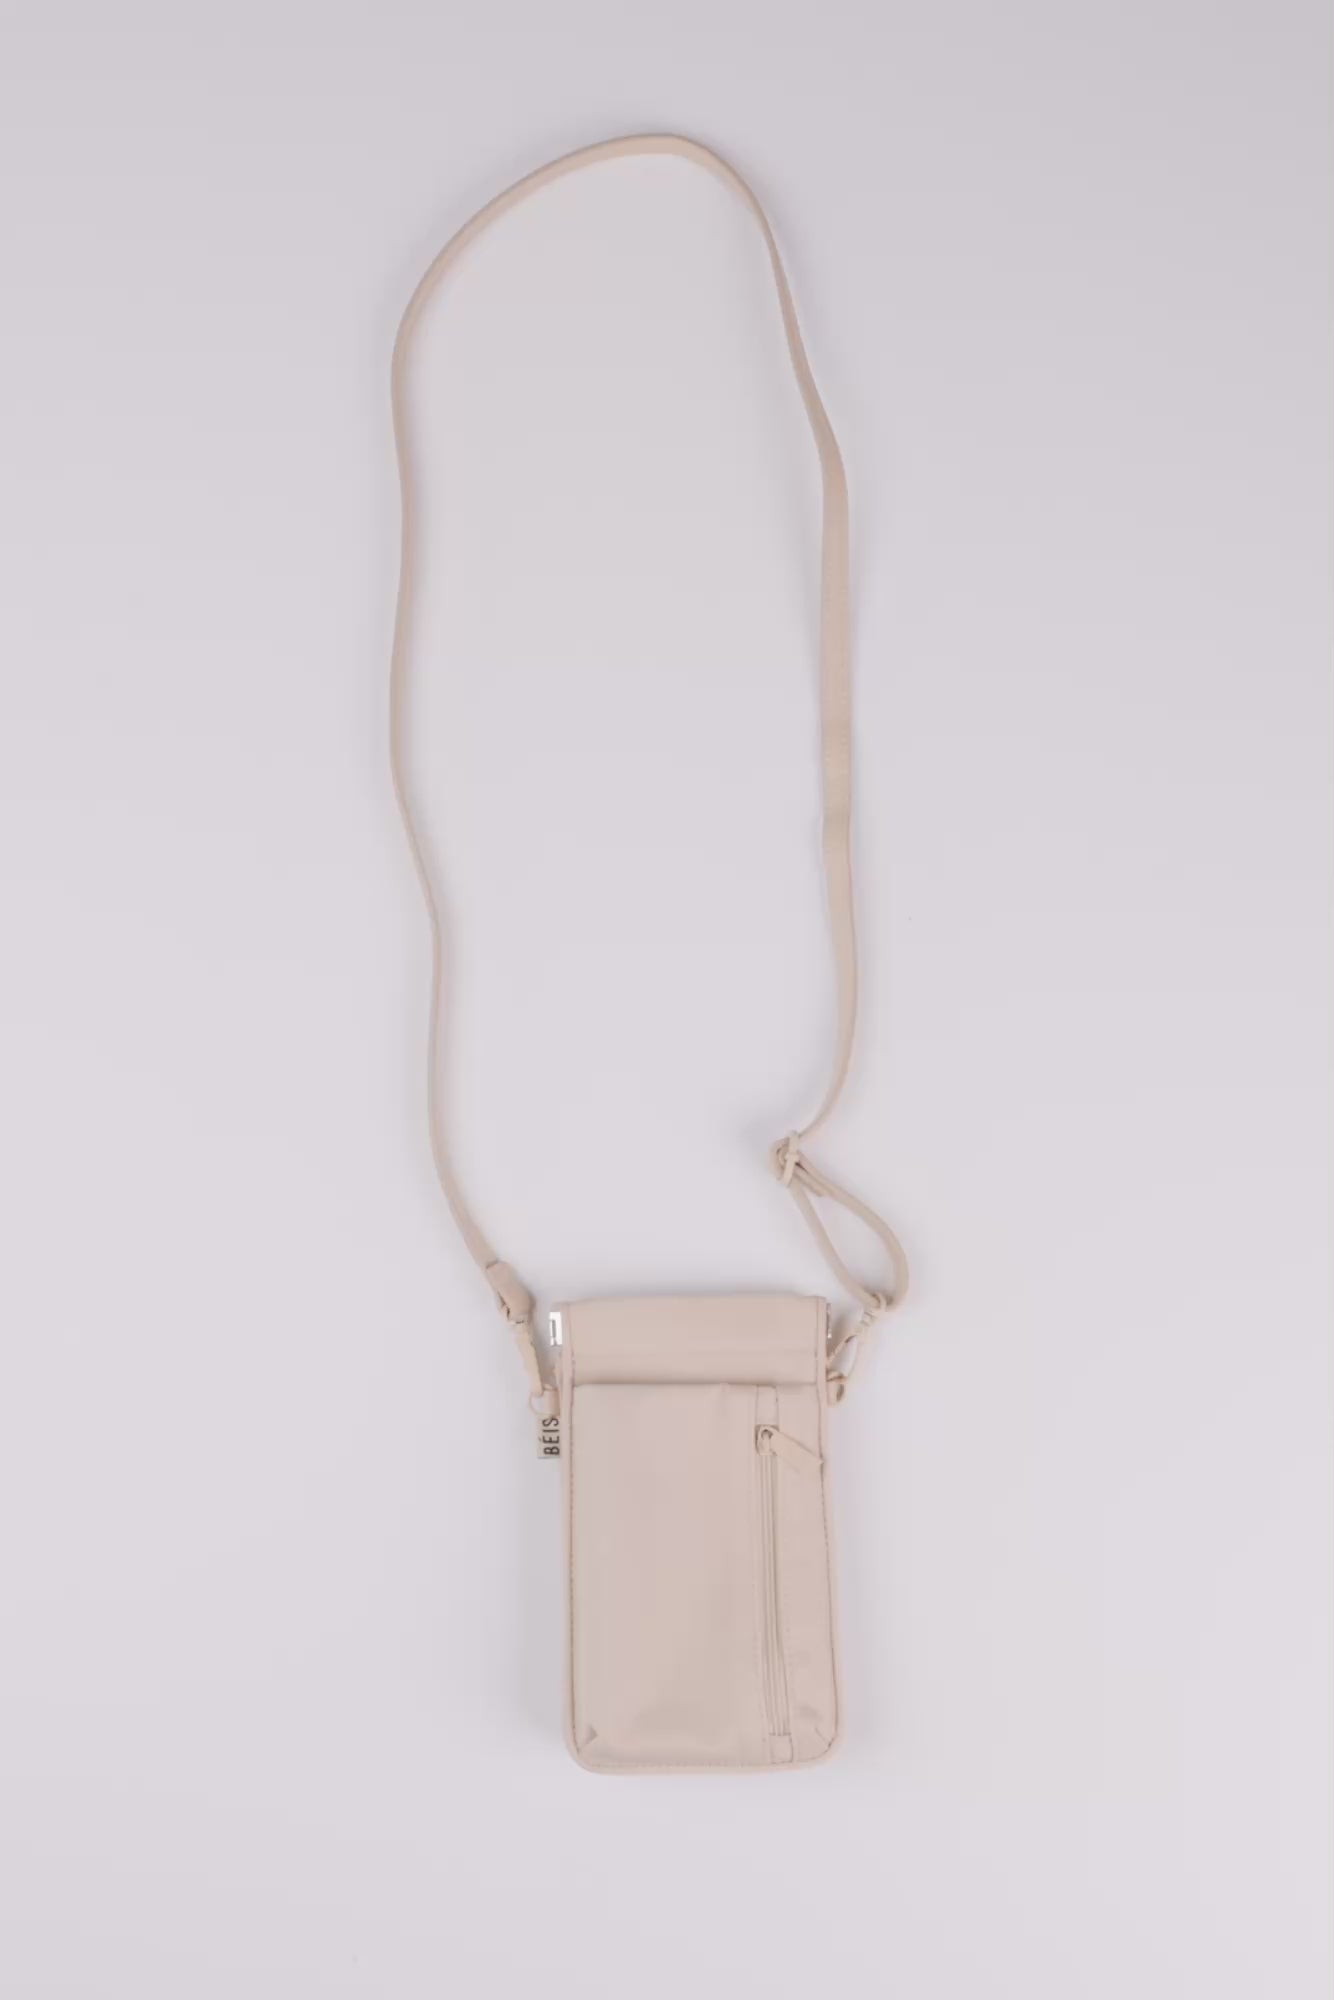 3.0] Pink Plaid Crossbody Bag